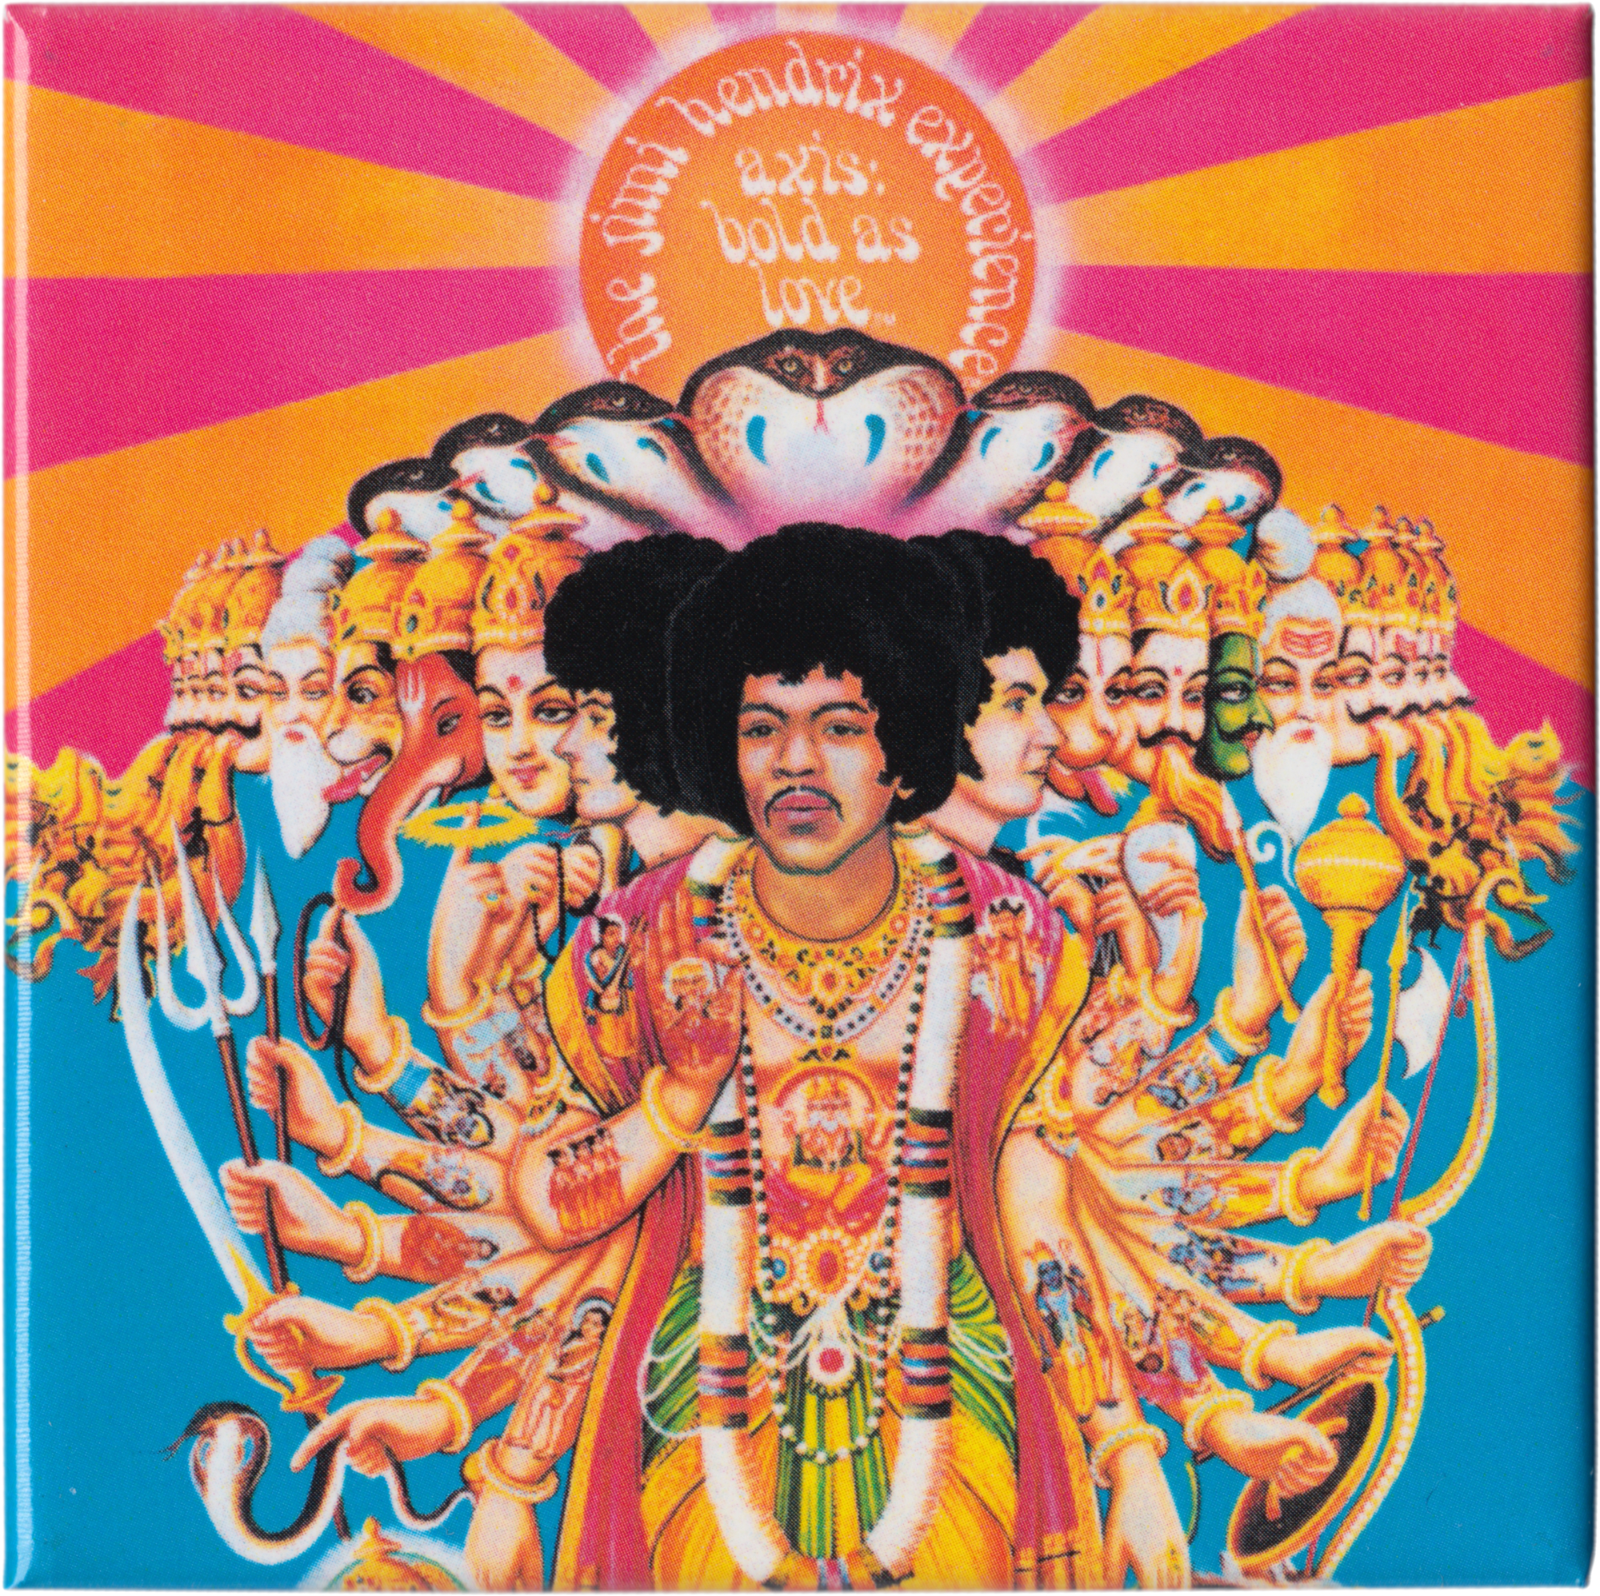 Magnet - Jimi Hendrix Axis Bold As Love Art Rock Music Fridge Refrigerator 31278